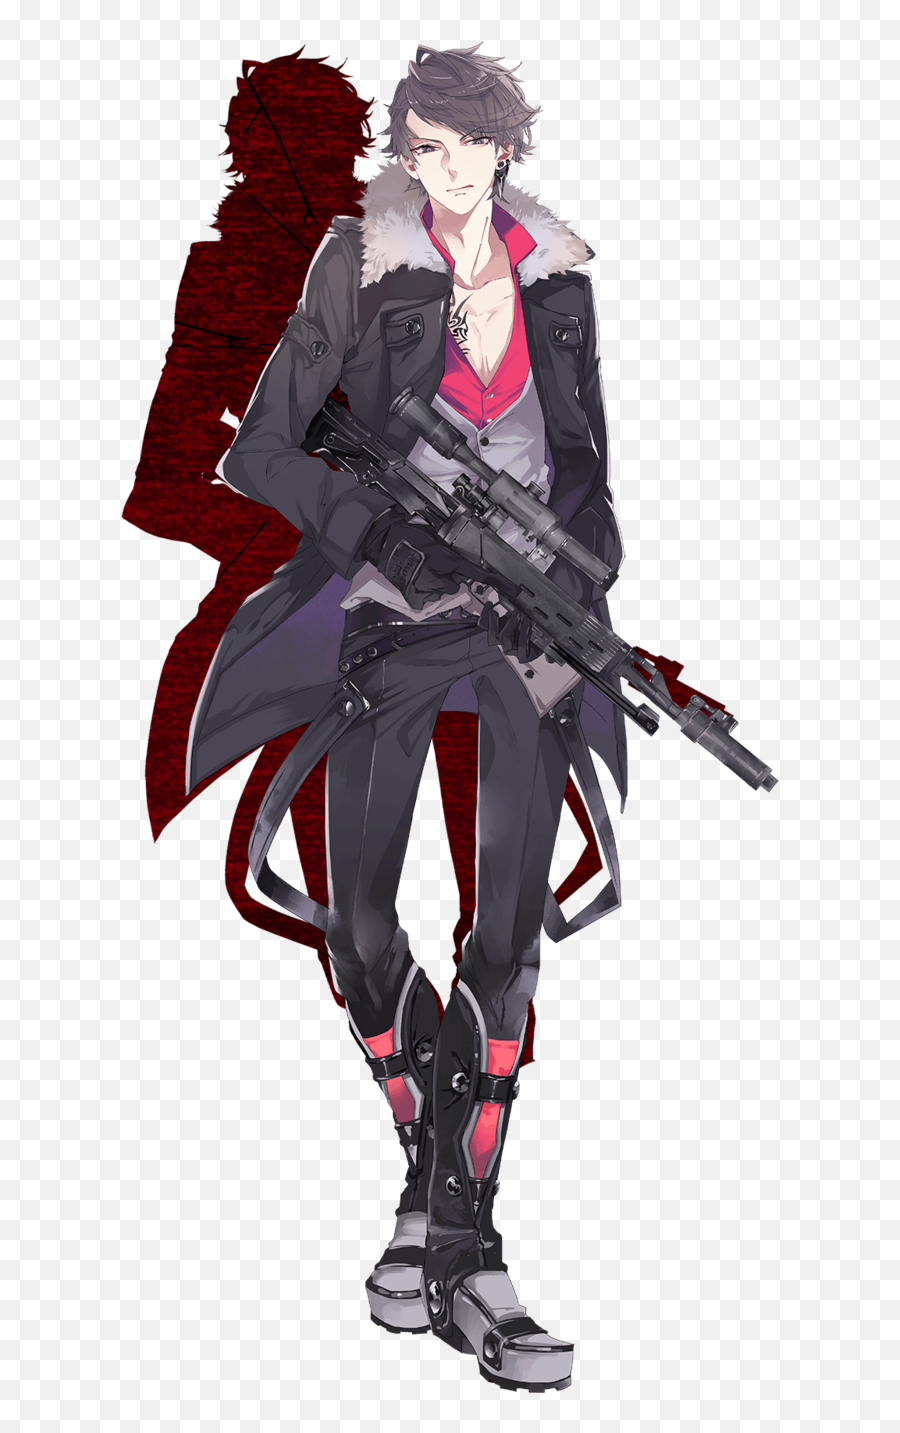 Anime Guy With Gun Png Image - Anime Guy With Gun Png,Holding Gun Png